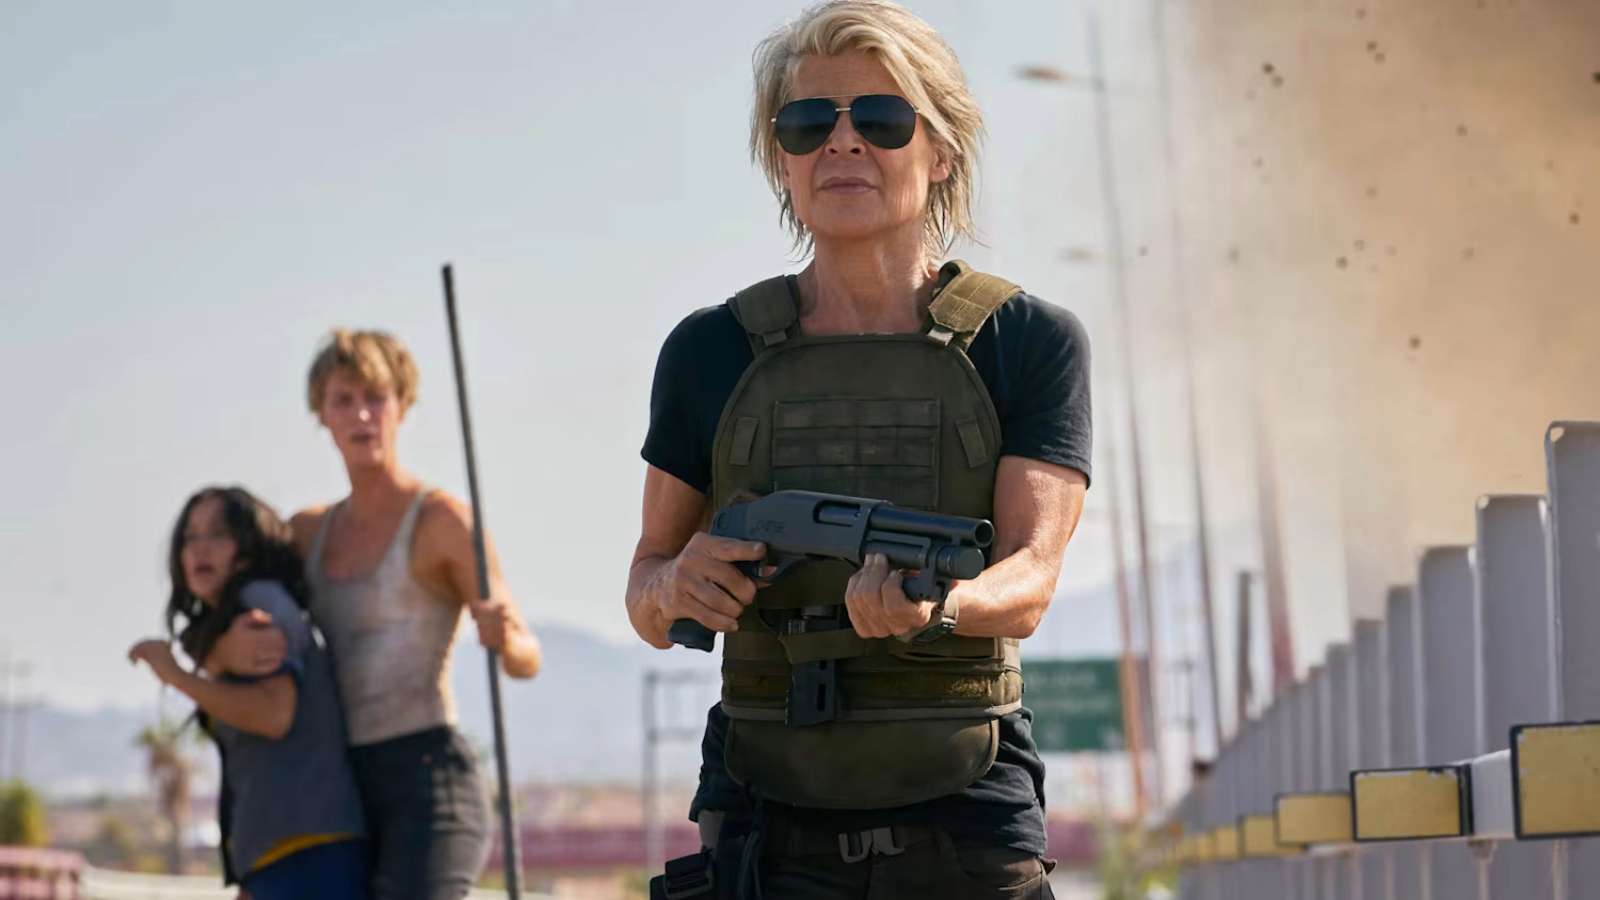 Linda Hamilton in Terminator: Dark Fate holding a gun and wearing sunglasses